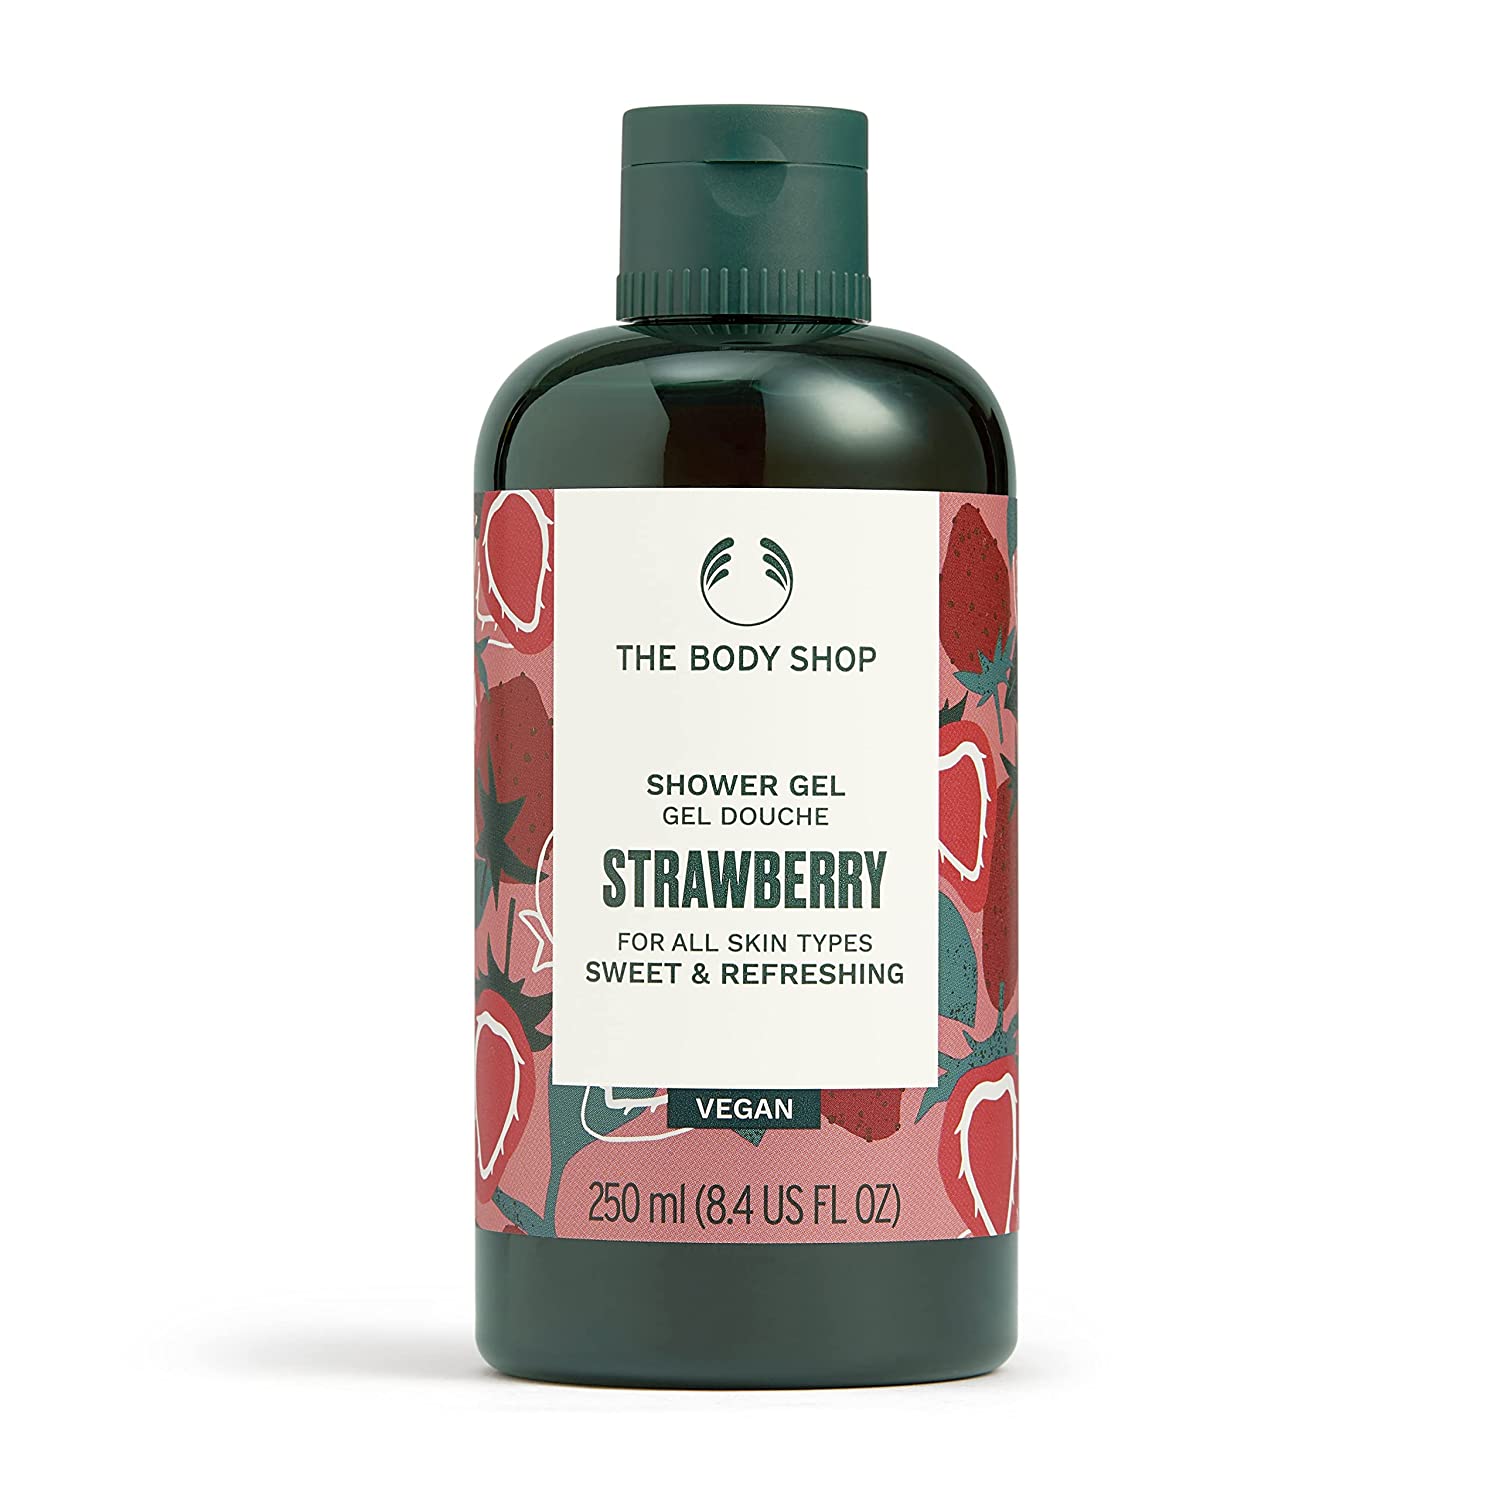 The Body Shop Strawberry Shower Gel (250ml) The Body Shop